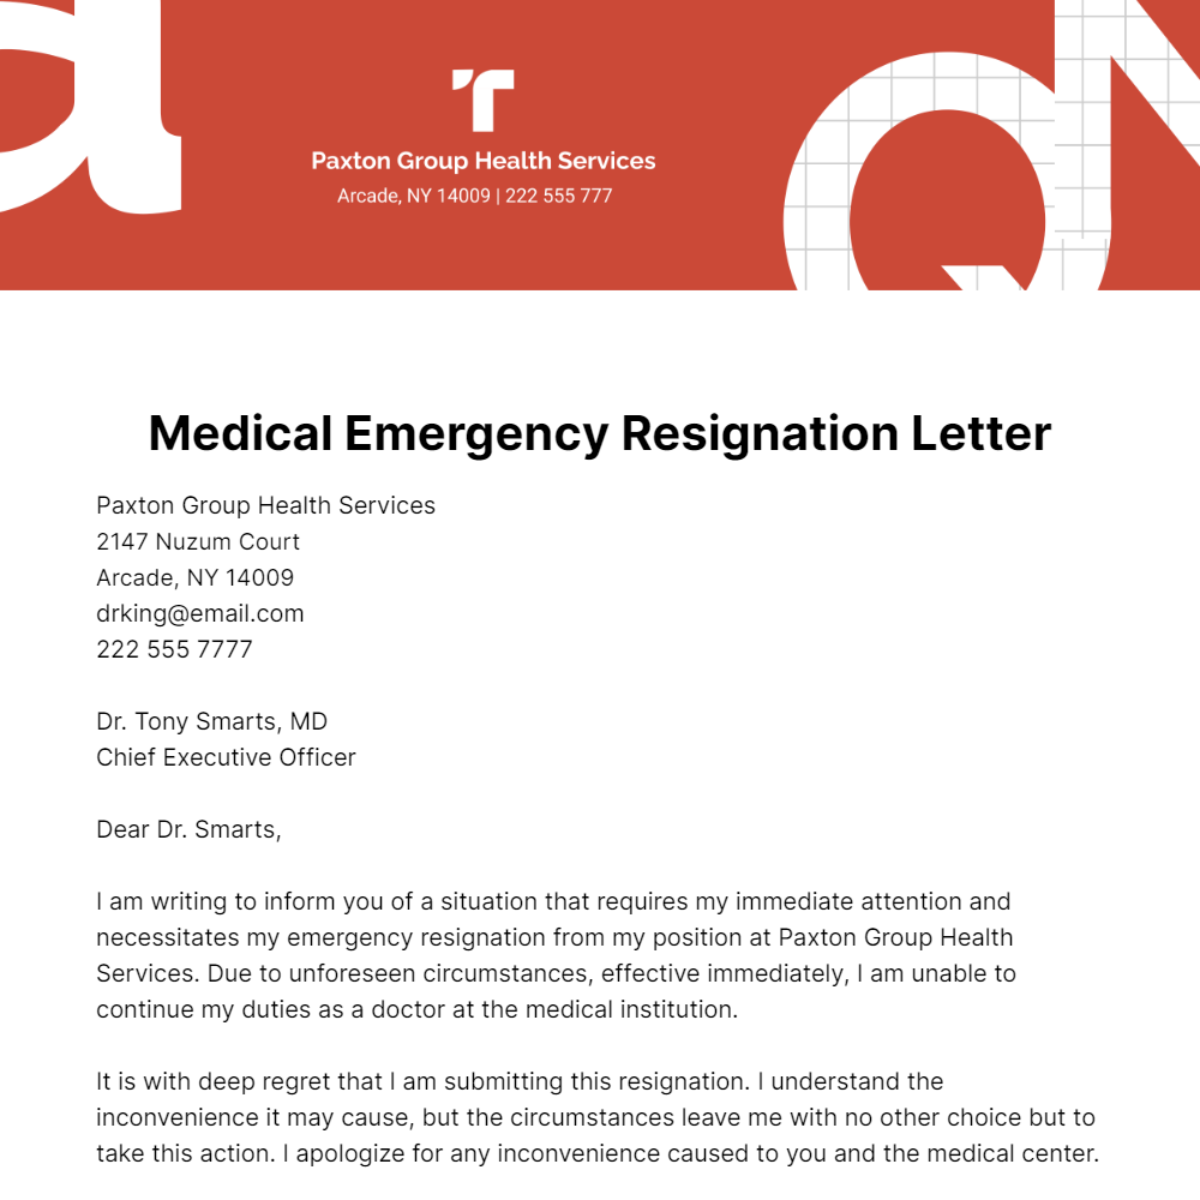 Medical Emergency Resignation Letter   Template